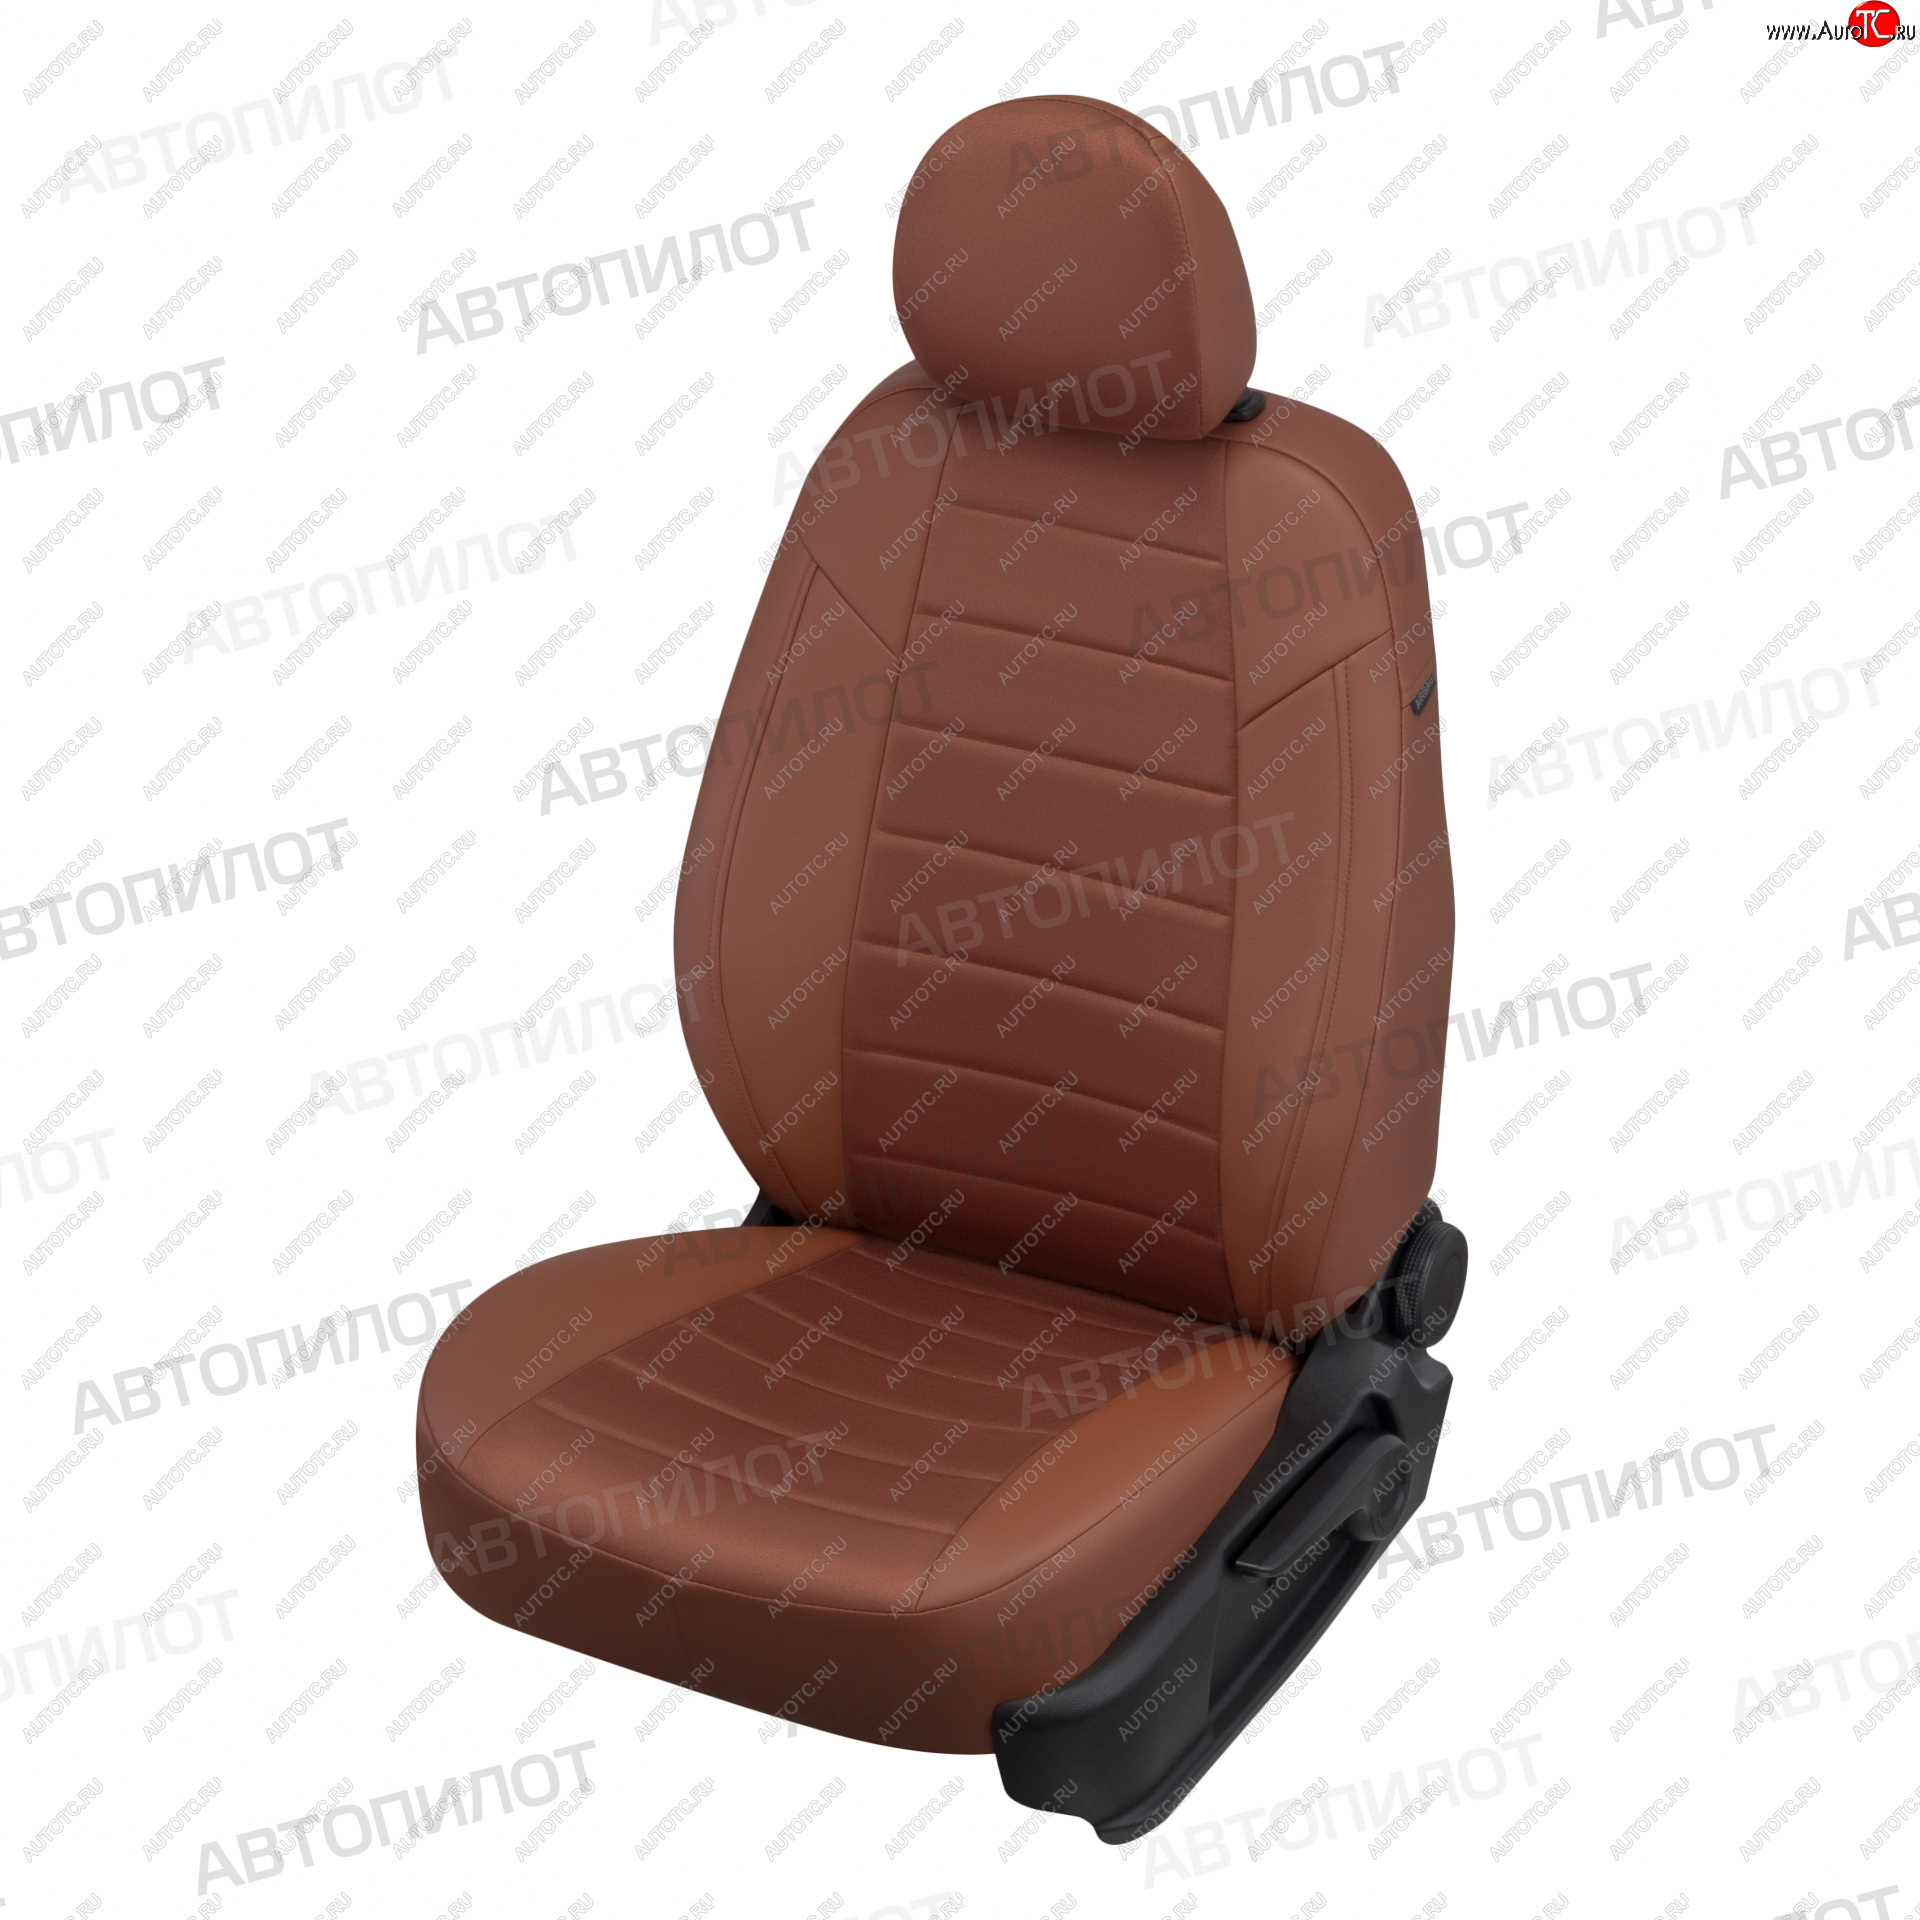 13 449 р. Чехлы сидений (экокожа/алькантара) Автопилот  KIA Optima  3 TF (2010-2016) (коричневый)